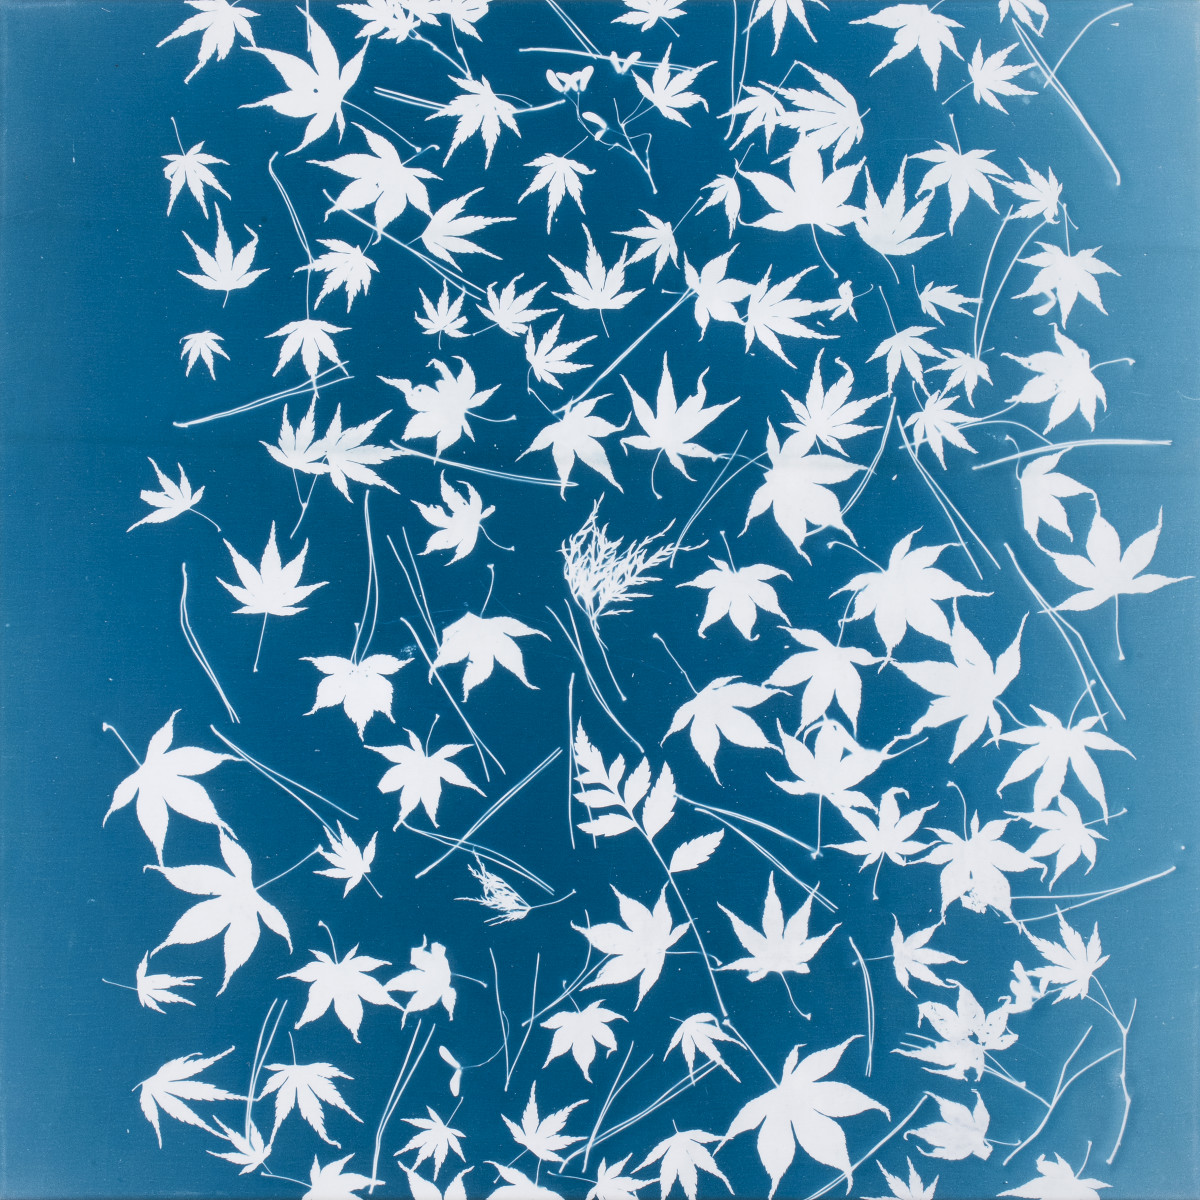 Véronique Arnold, ‘Écriture lumineuse’, 2019, Cyanotype on canvas